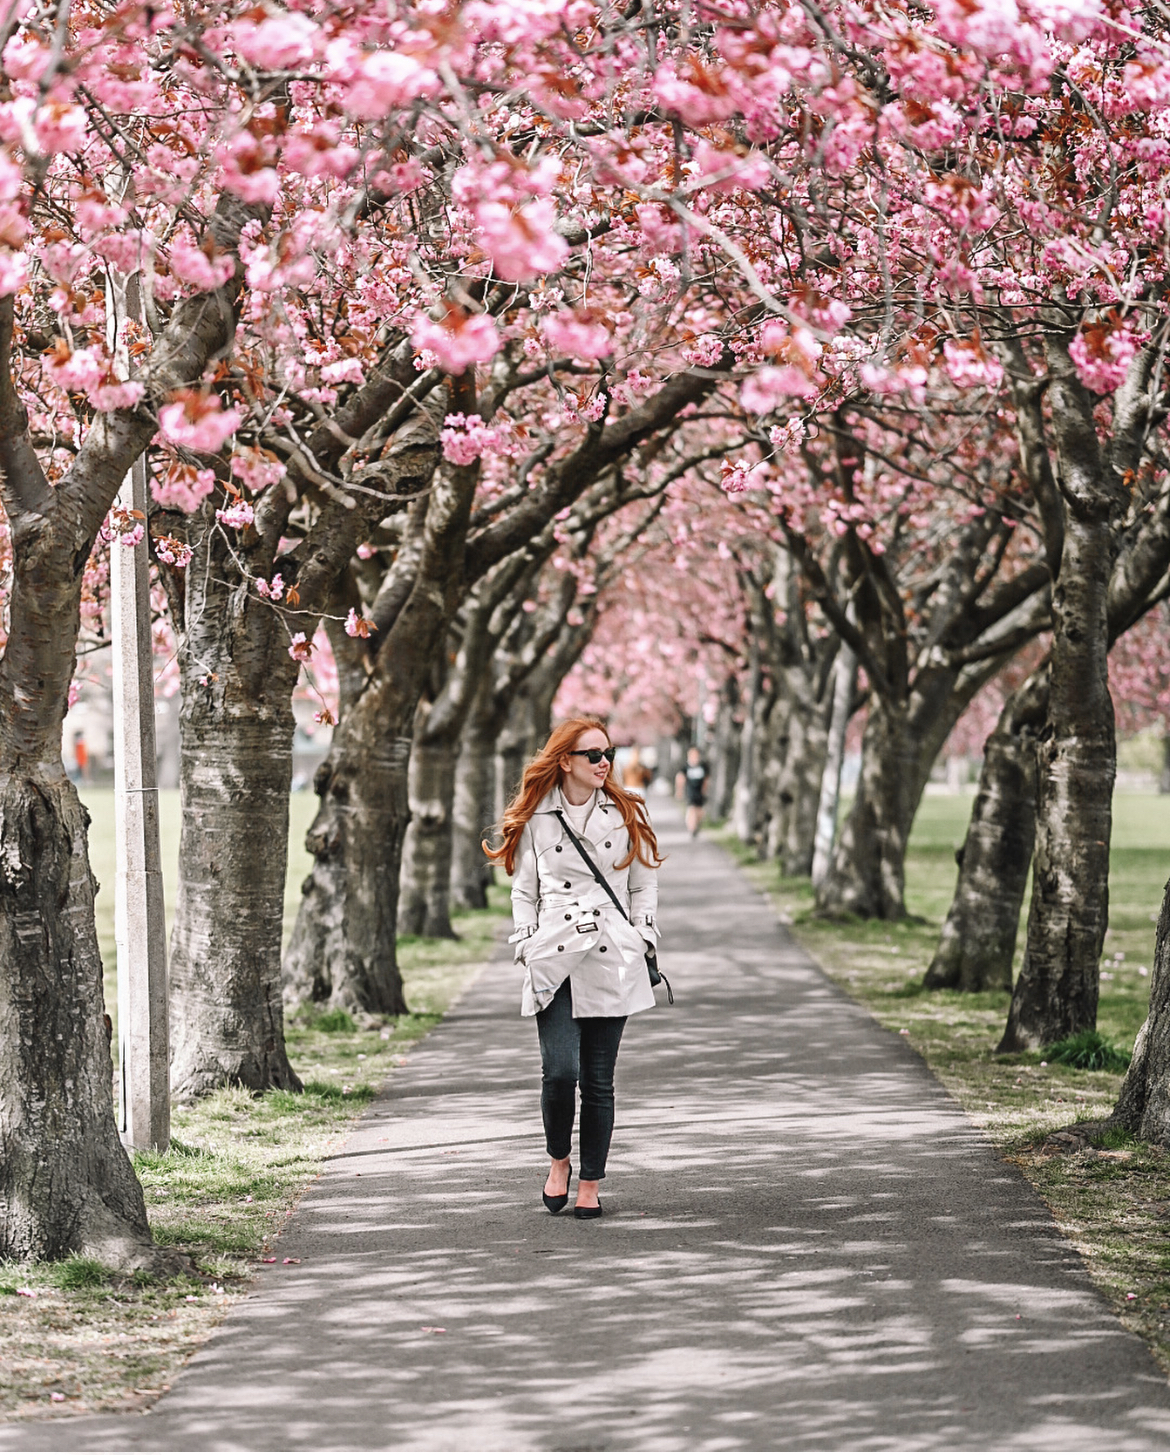 cherry blossom trees in The Meadowns Edinburgh